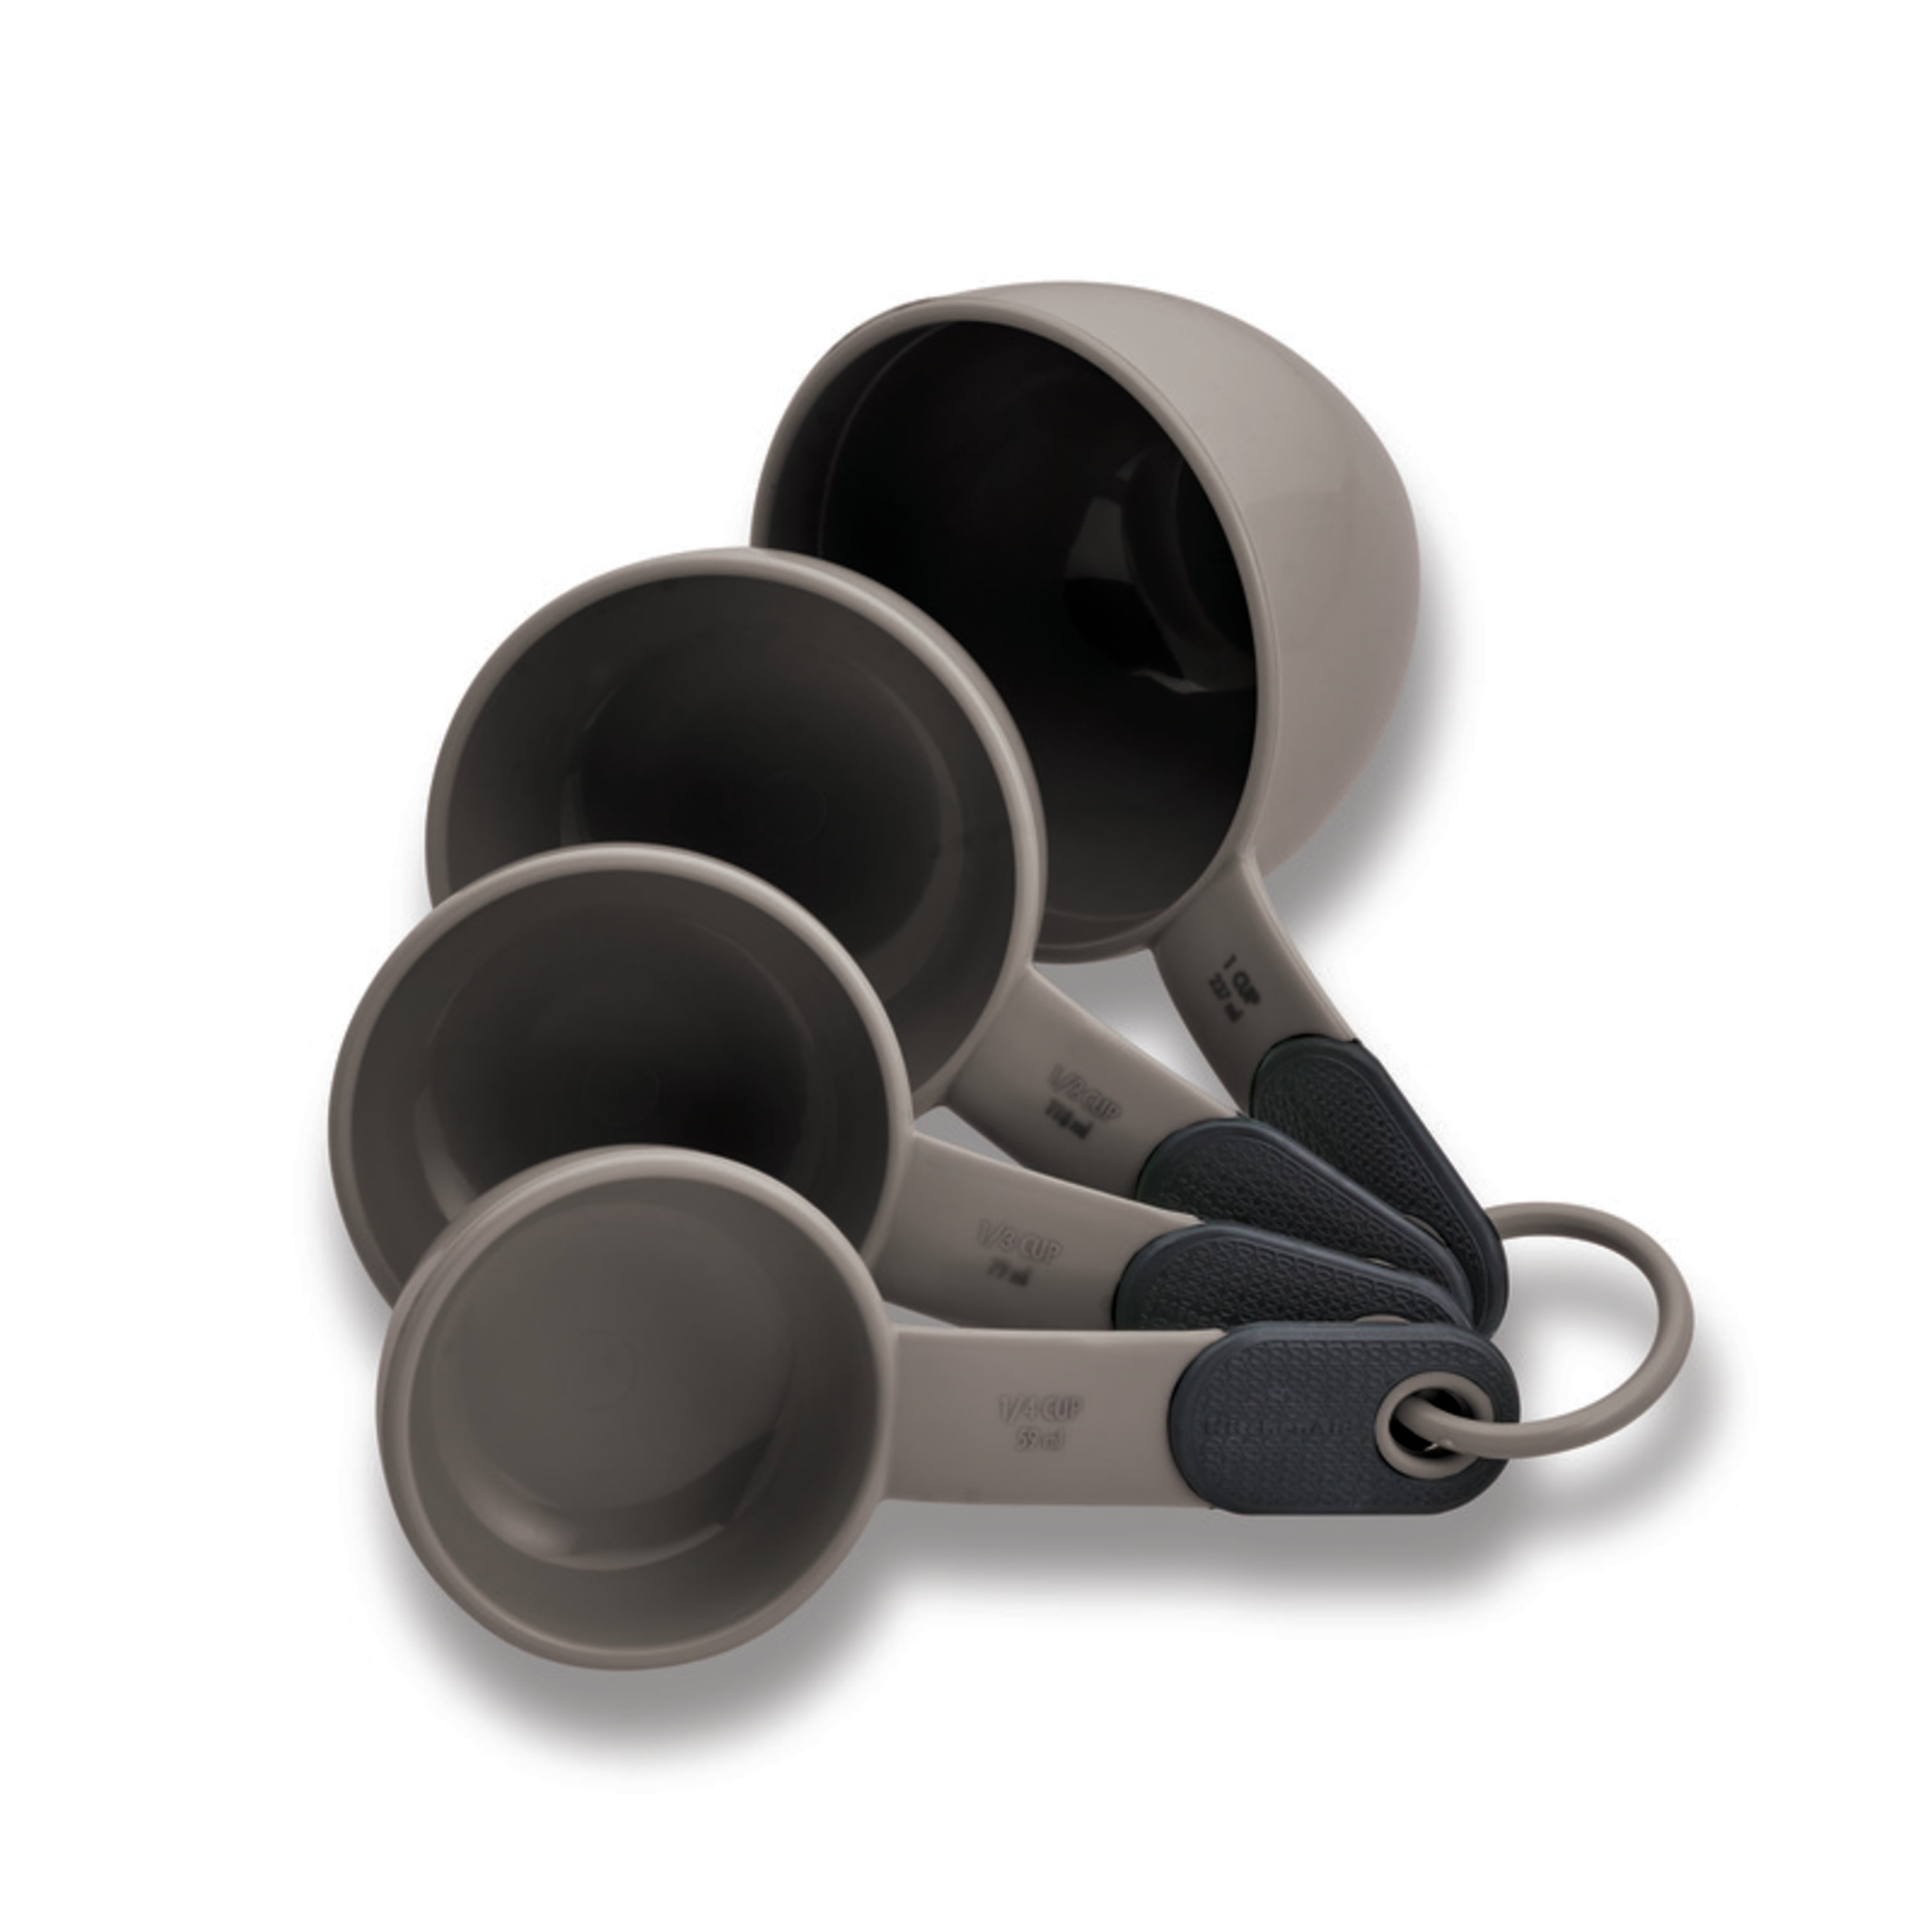 KitchenAid Classic Measuring Cups And Spoons Set, Set of 9, Aqua Sky/Black